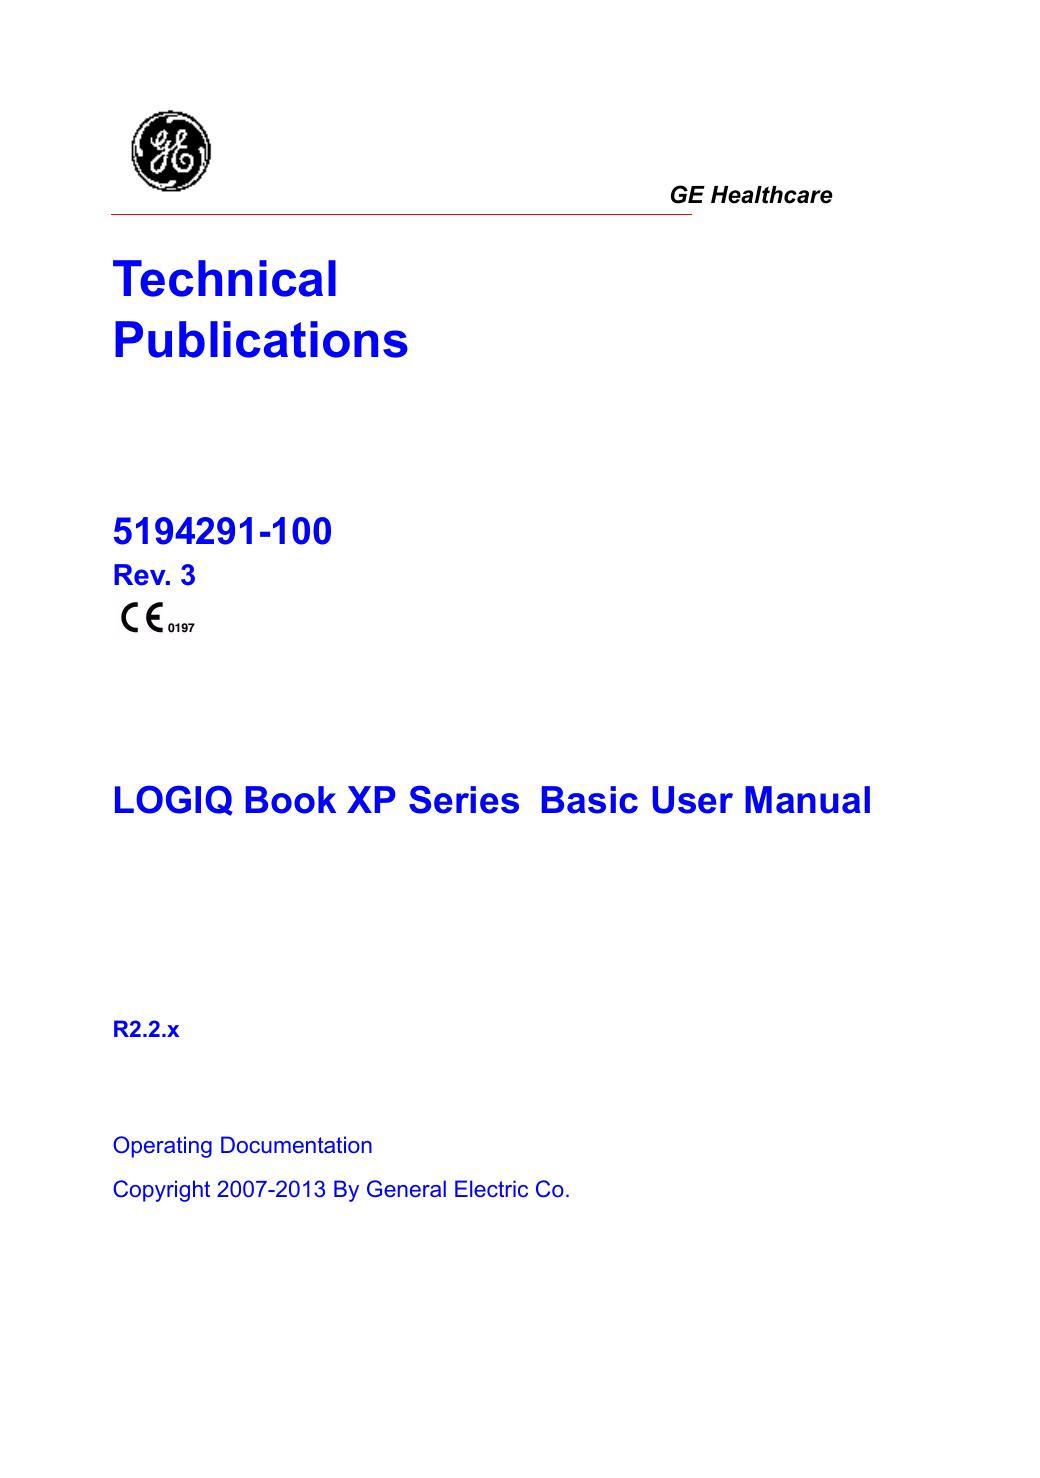 logiq-book-xp-series-basic-user-manual.pdf